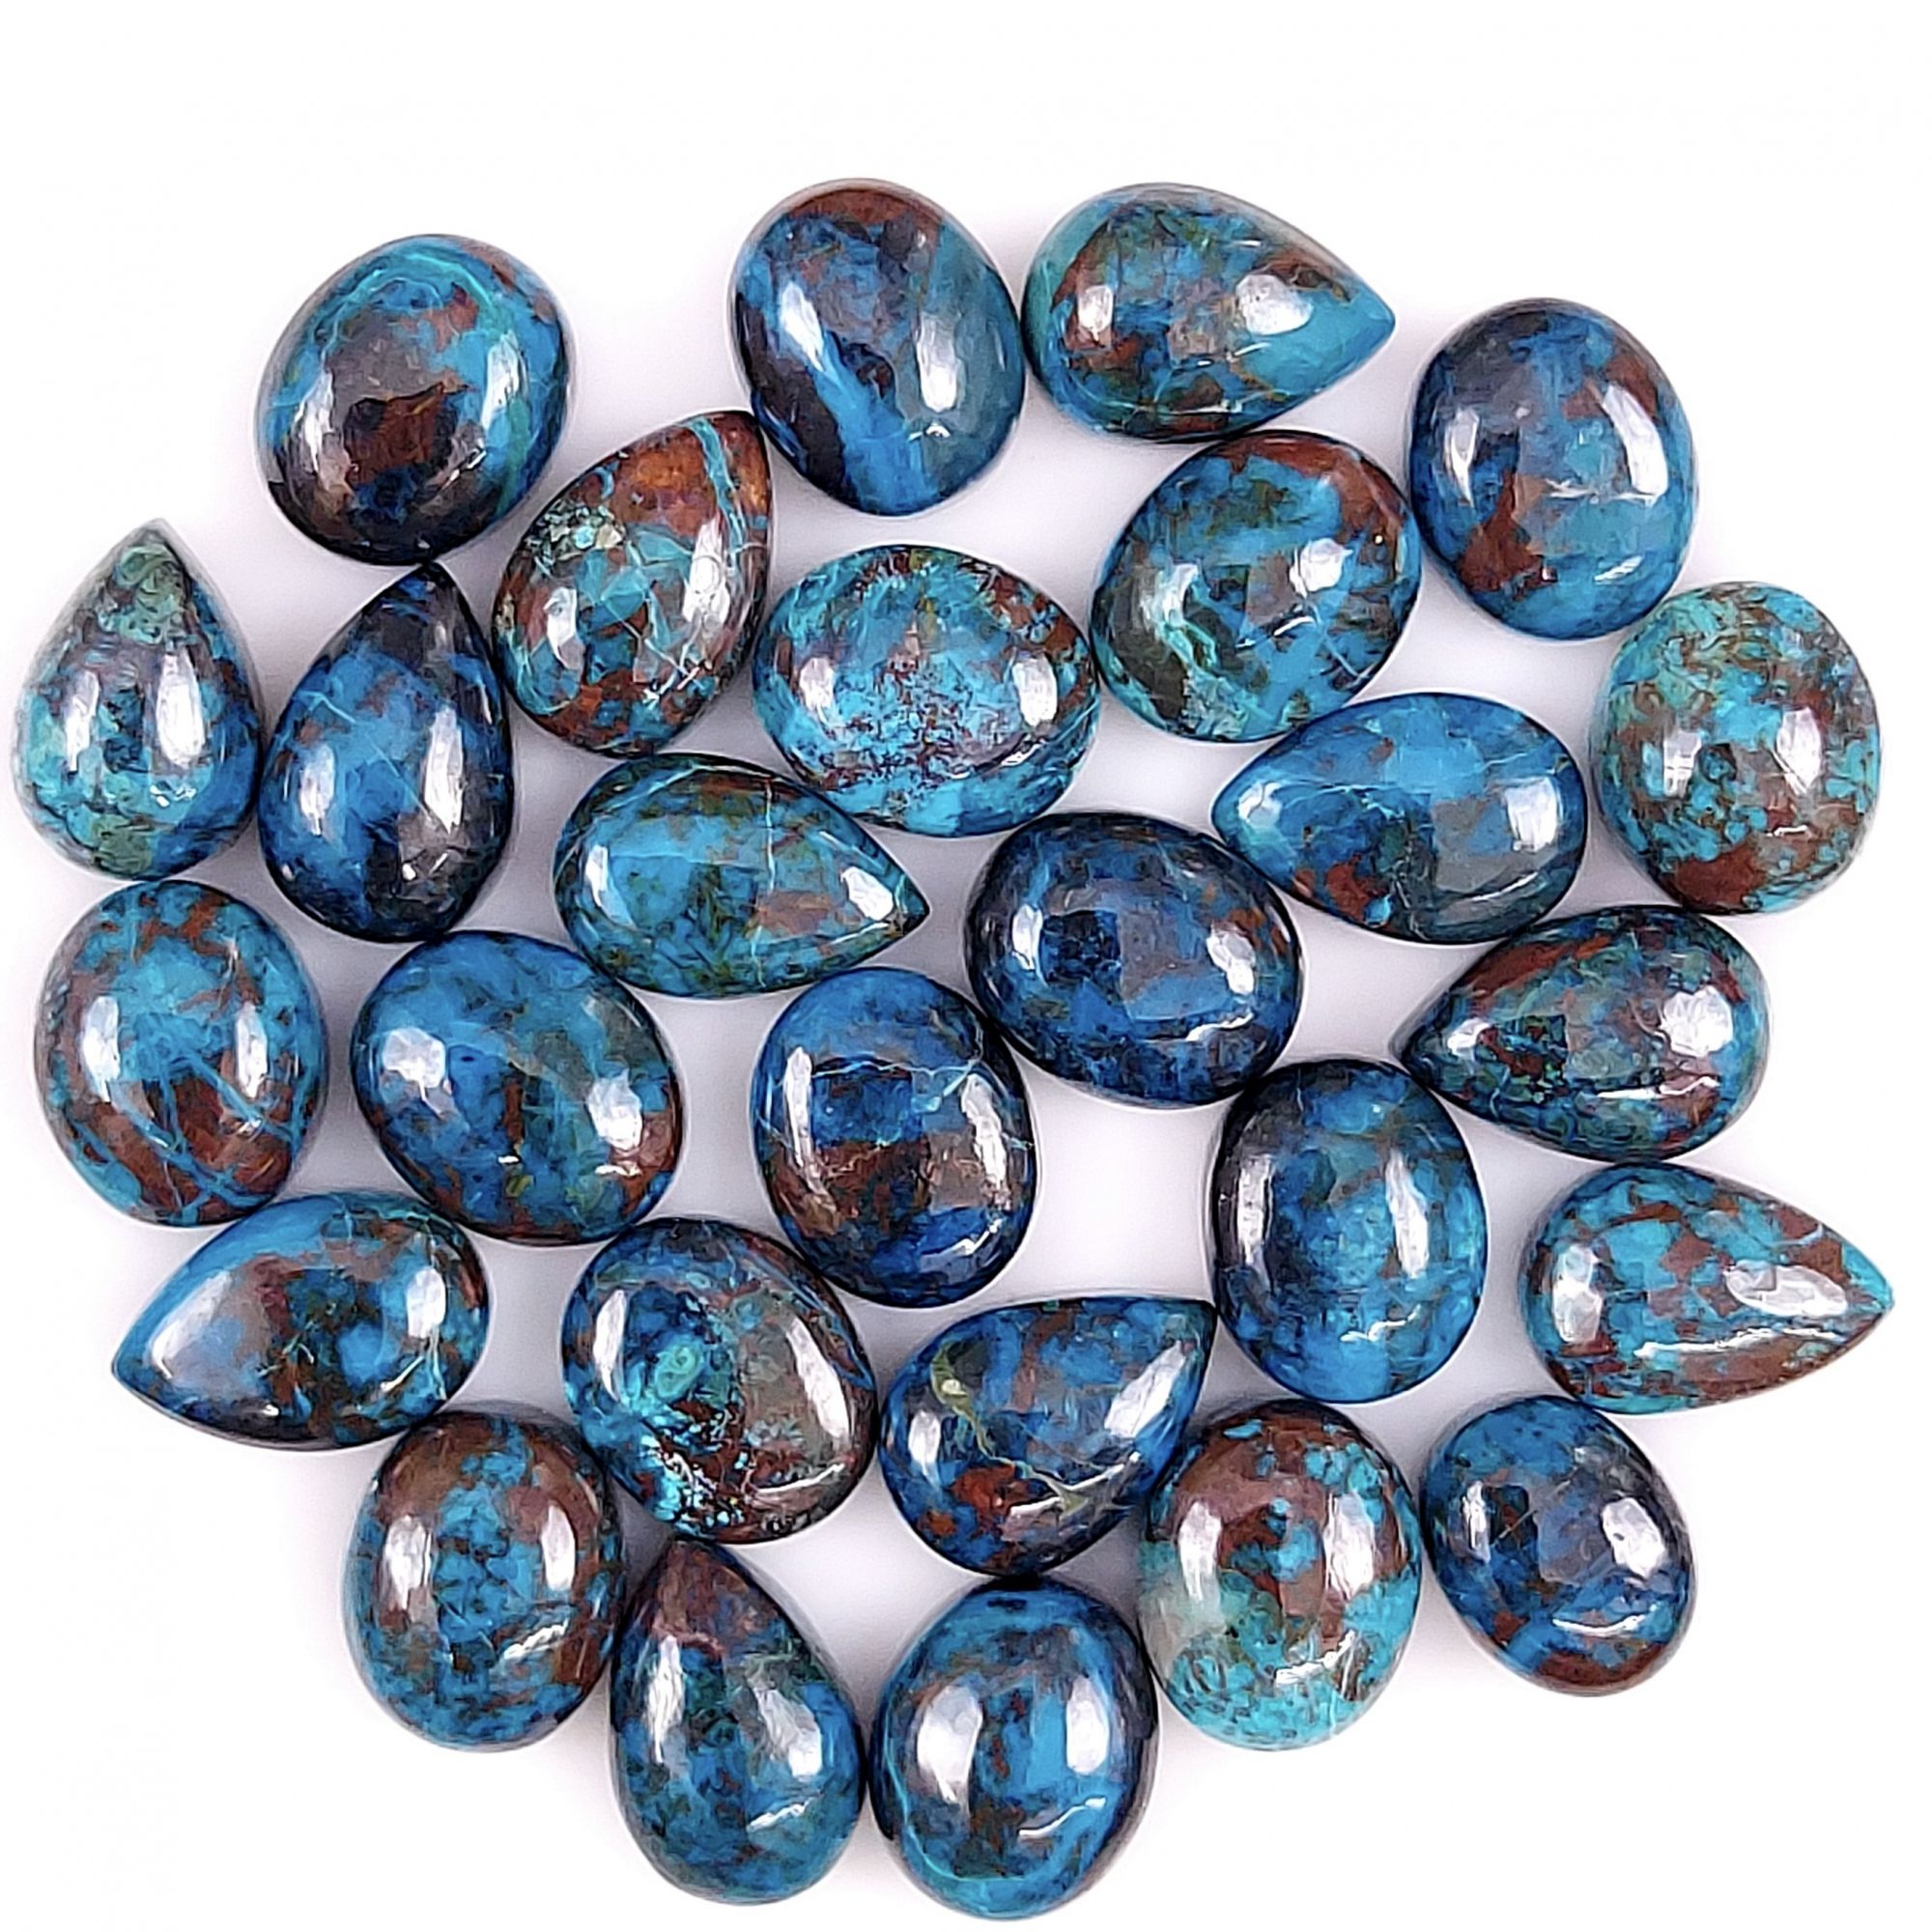 27 Pcs 116Cts Natural Chrysocolla Cabochon Lot Healing stone crystal,Loose gemstones Chrysocolla Mix Shape & Size Jewelry making Gemstone 11x9 12x9mm #G-1877